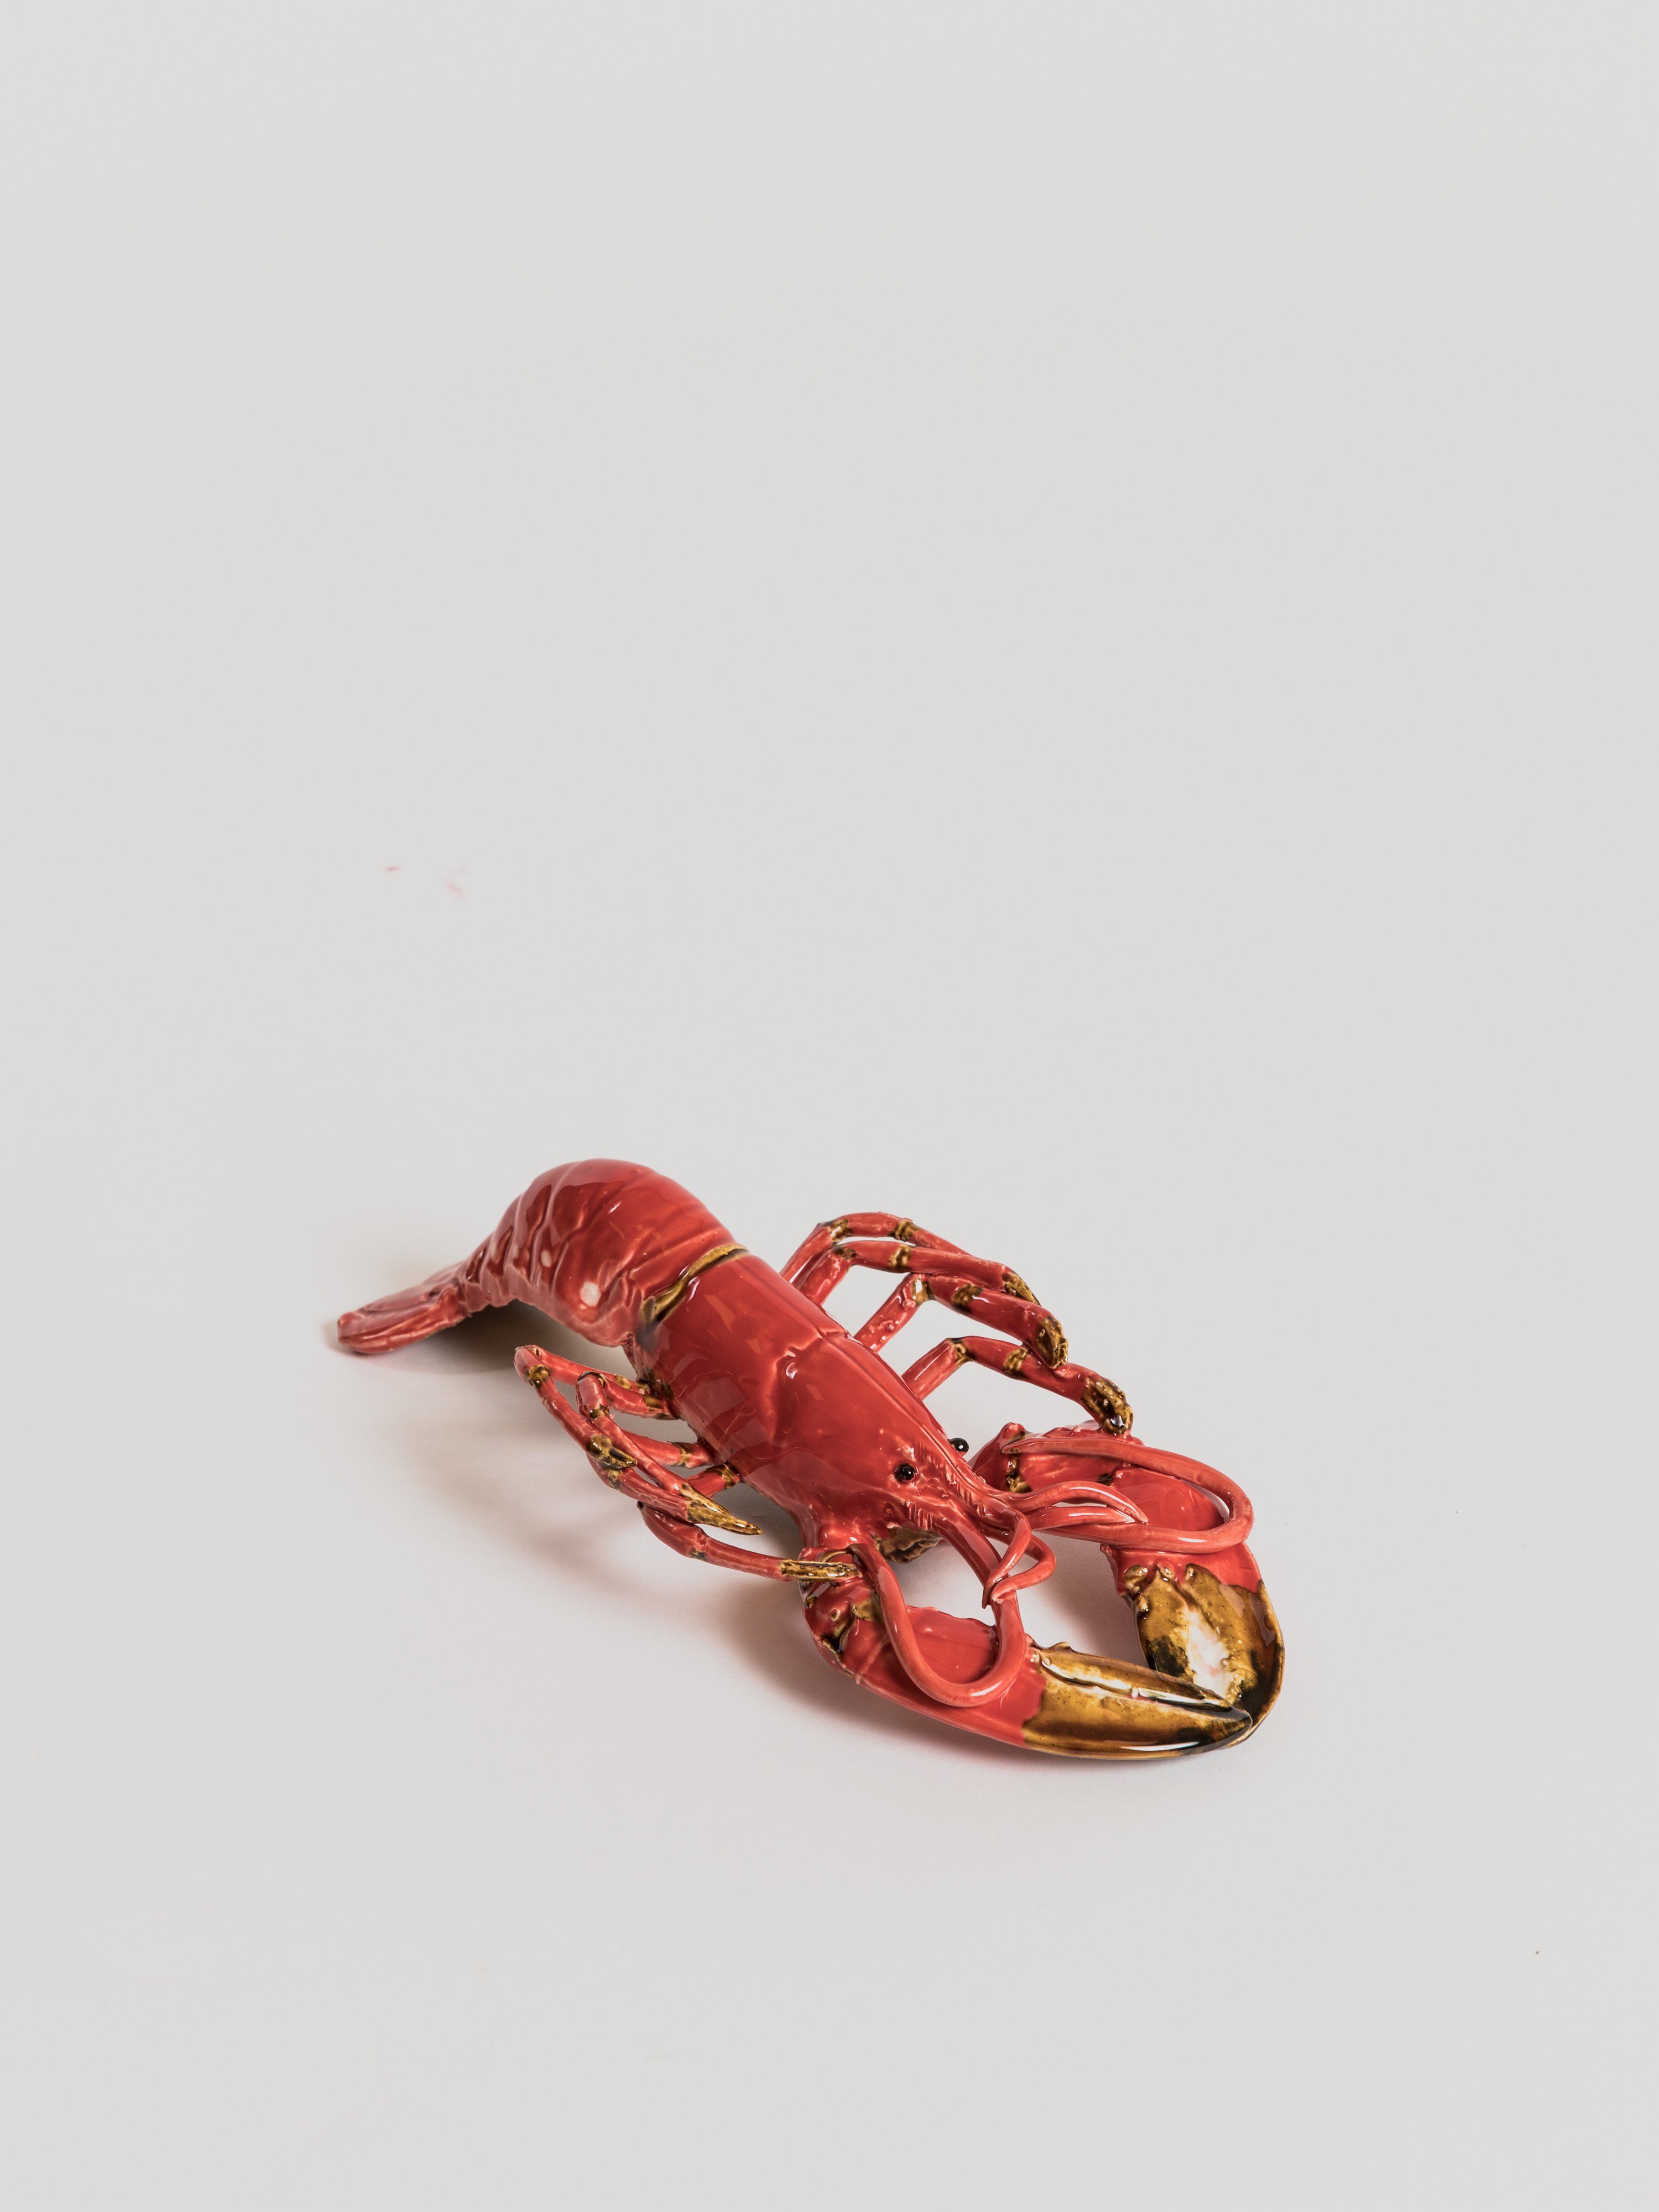 Lobster - Ceramic Statue Bull & Stein Red 31 cm 